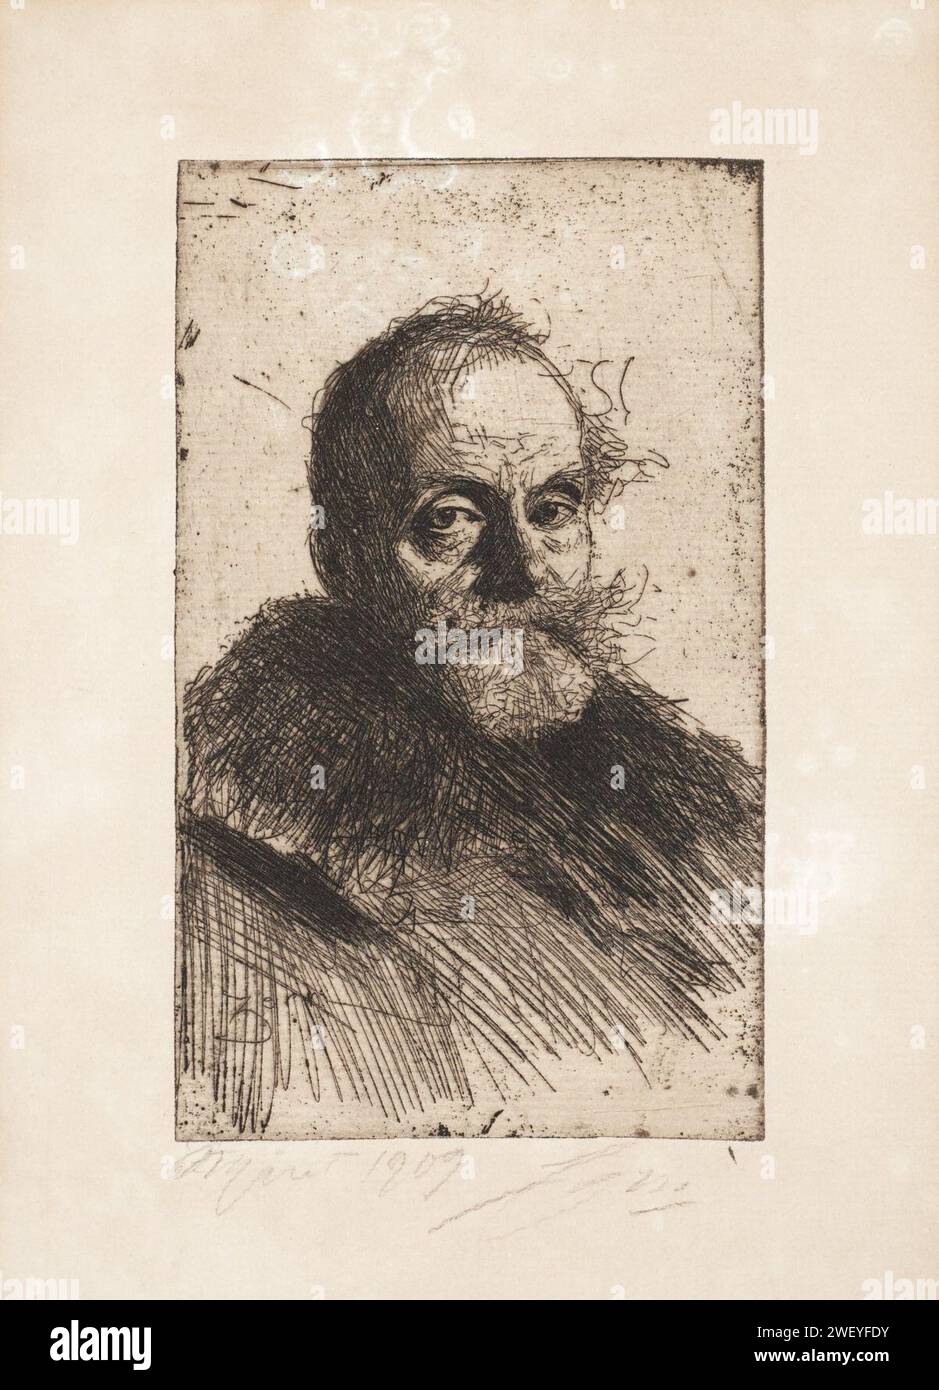 Anders Zorn - Christian Aspelin (etching) 1884. Stock Photo